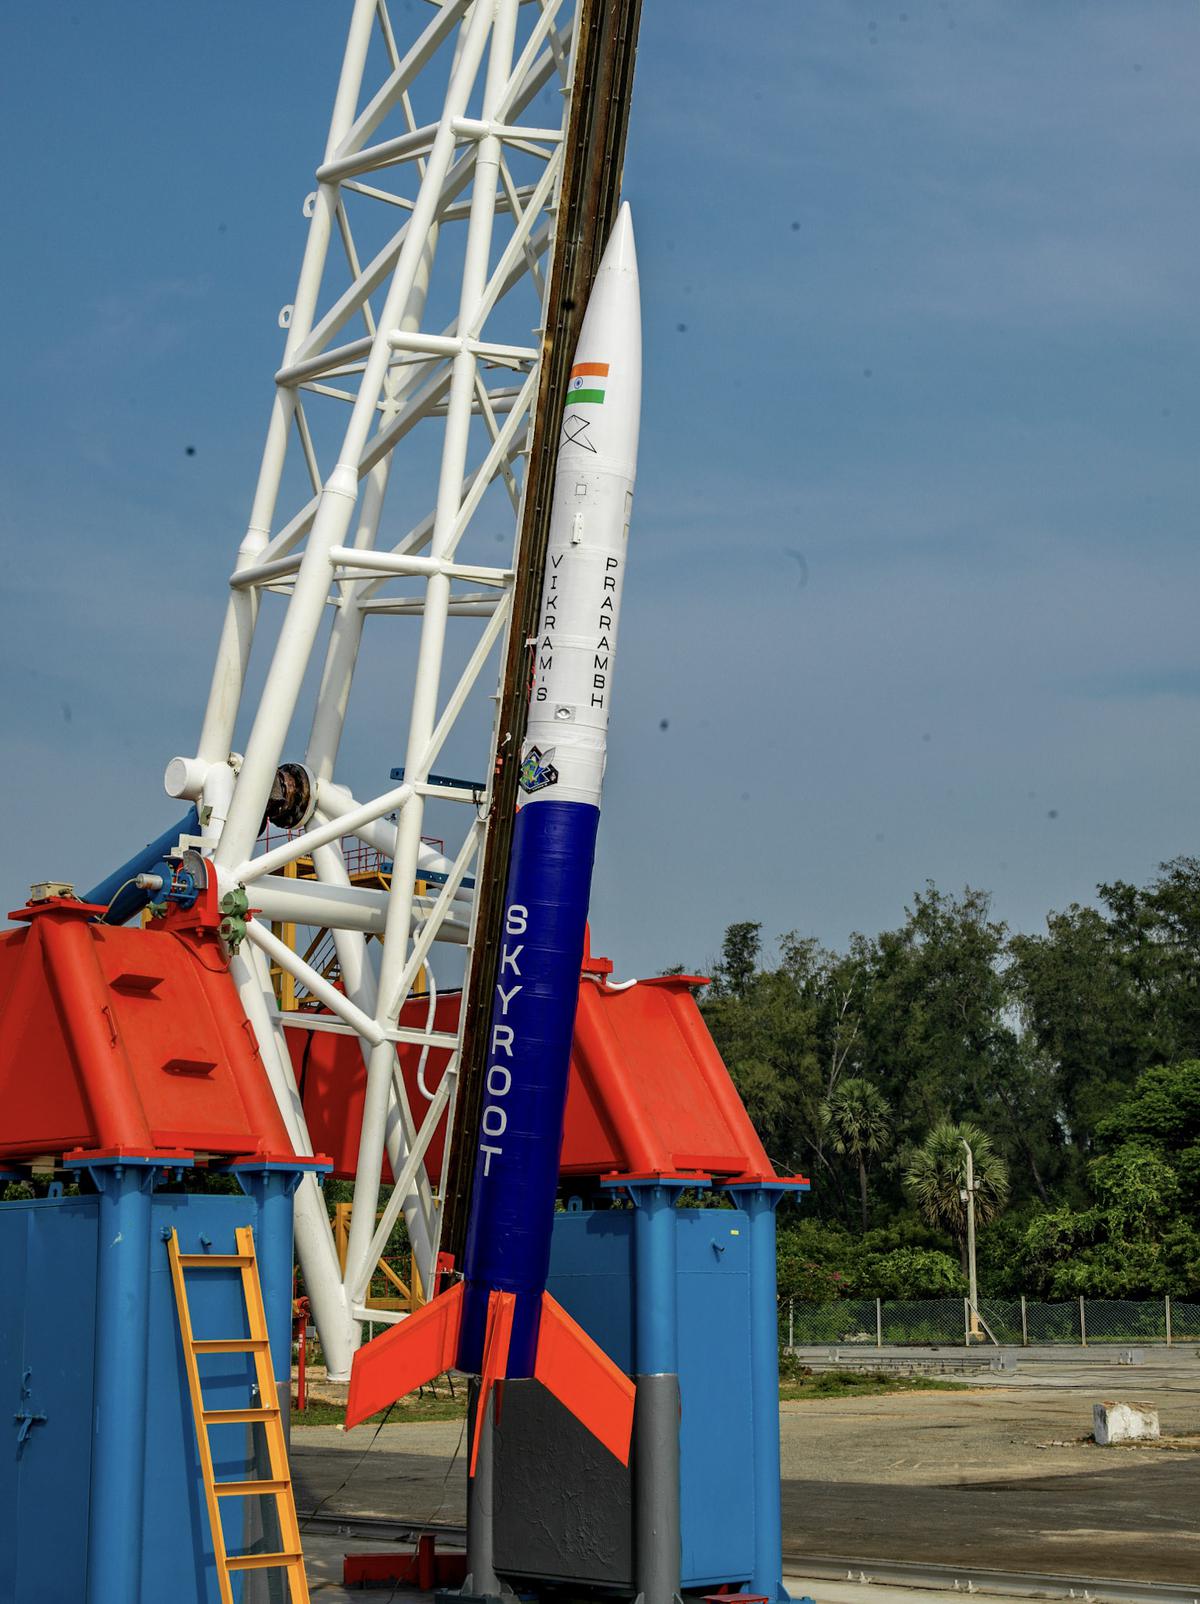 Skyroot 的运载火箭 Vikram-S 准备于 2022 年 11 月在 Sriharikota 发射